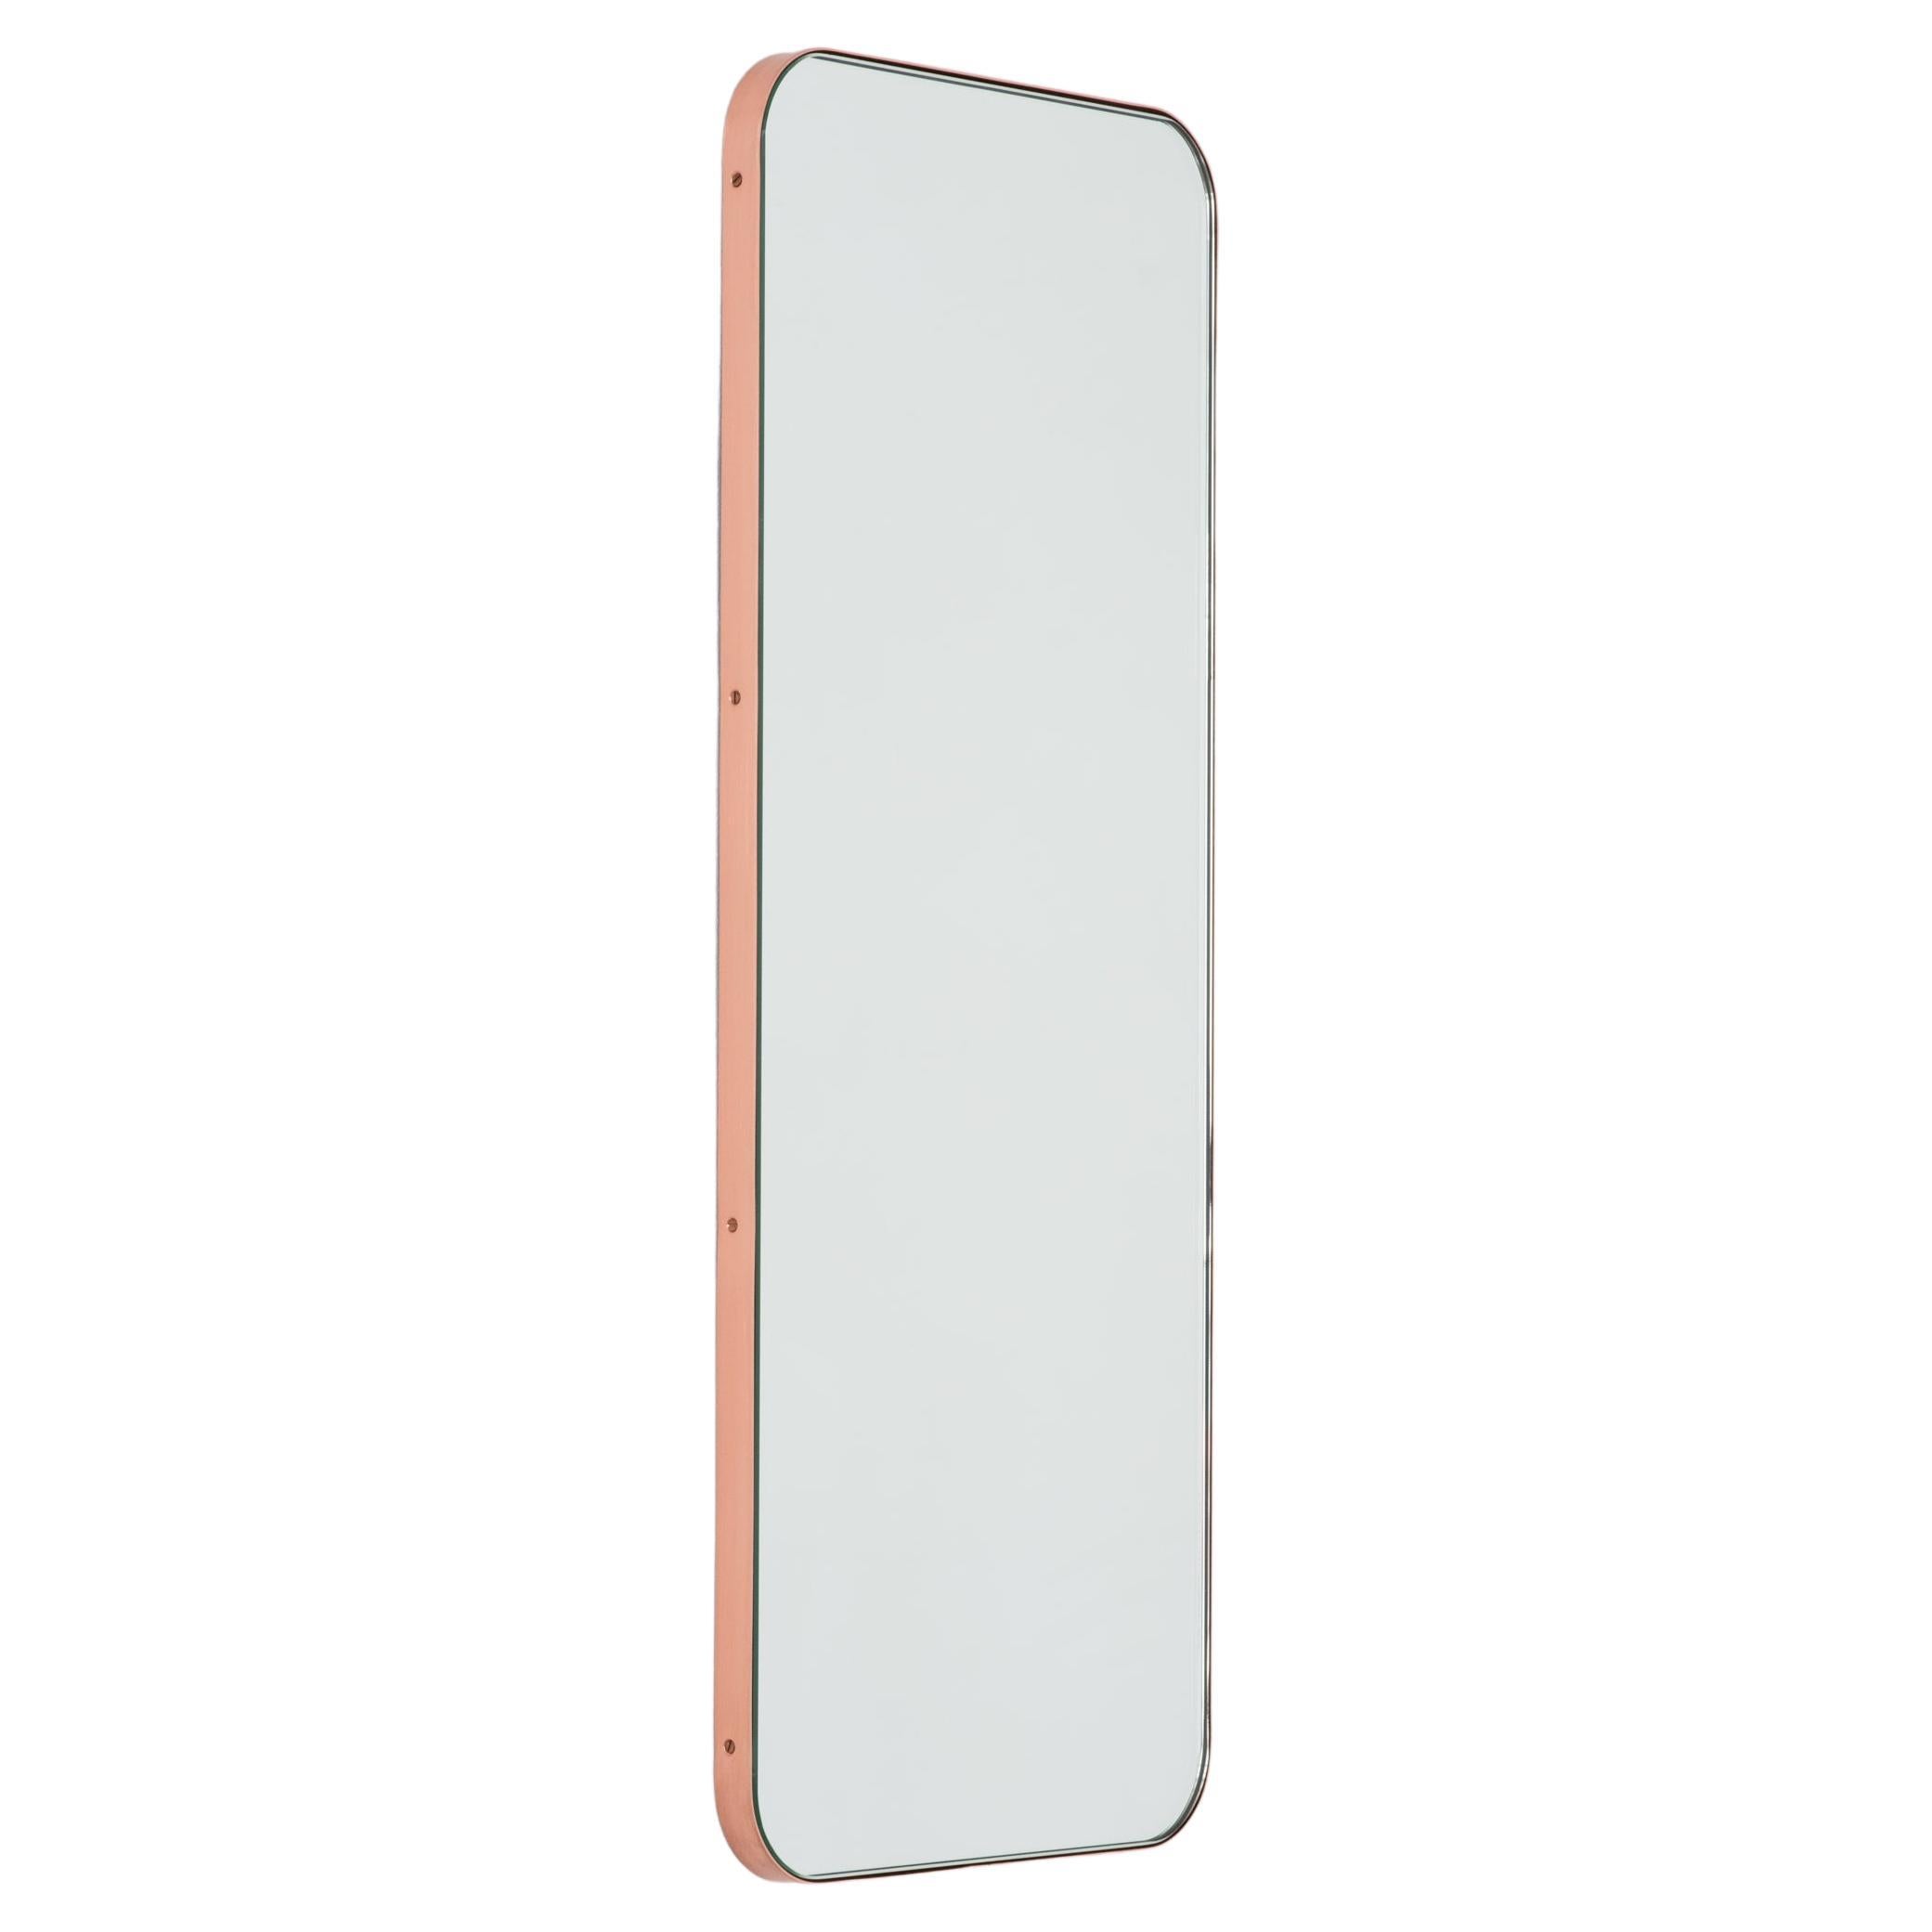 Quadris Rectangular Modern Mirror with a Minimalist Copper Frame, XL For Sale